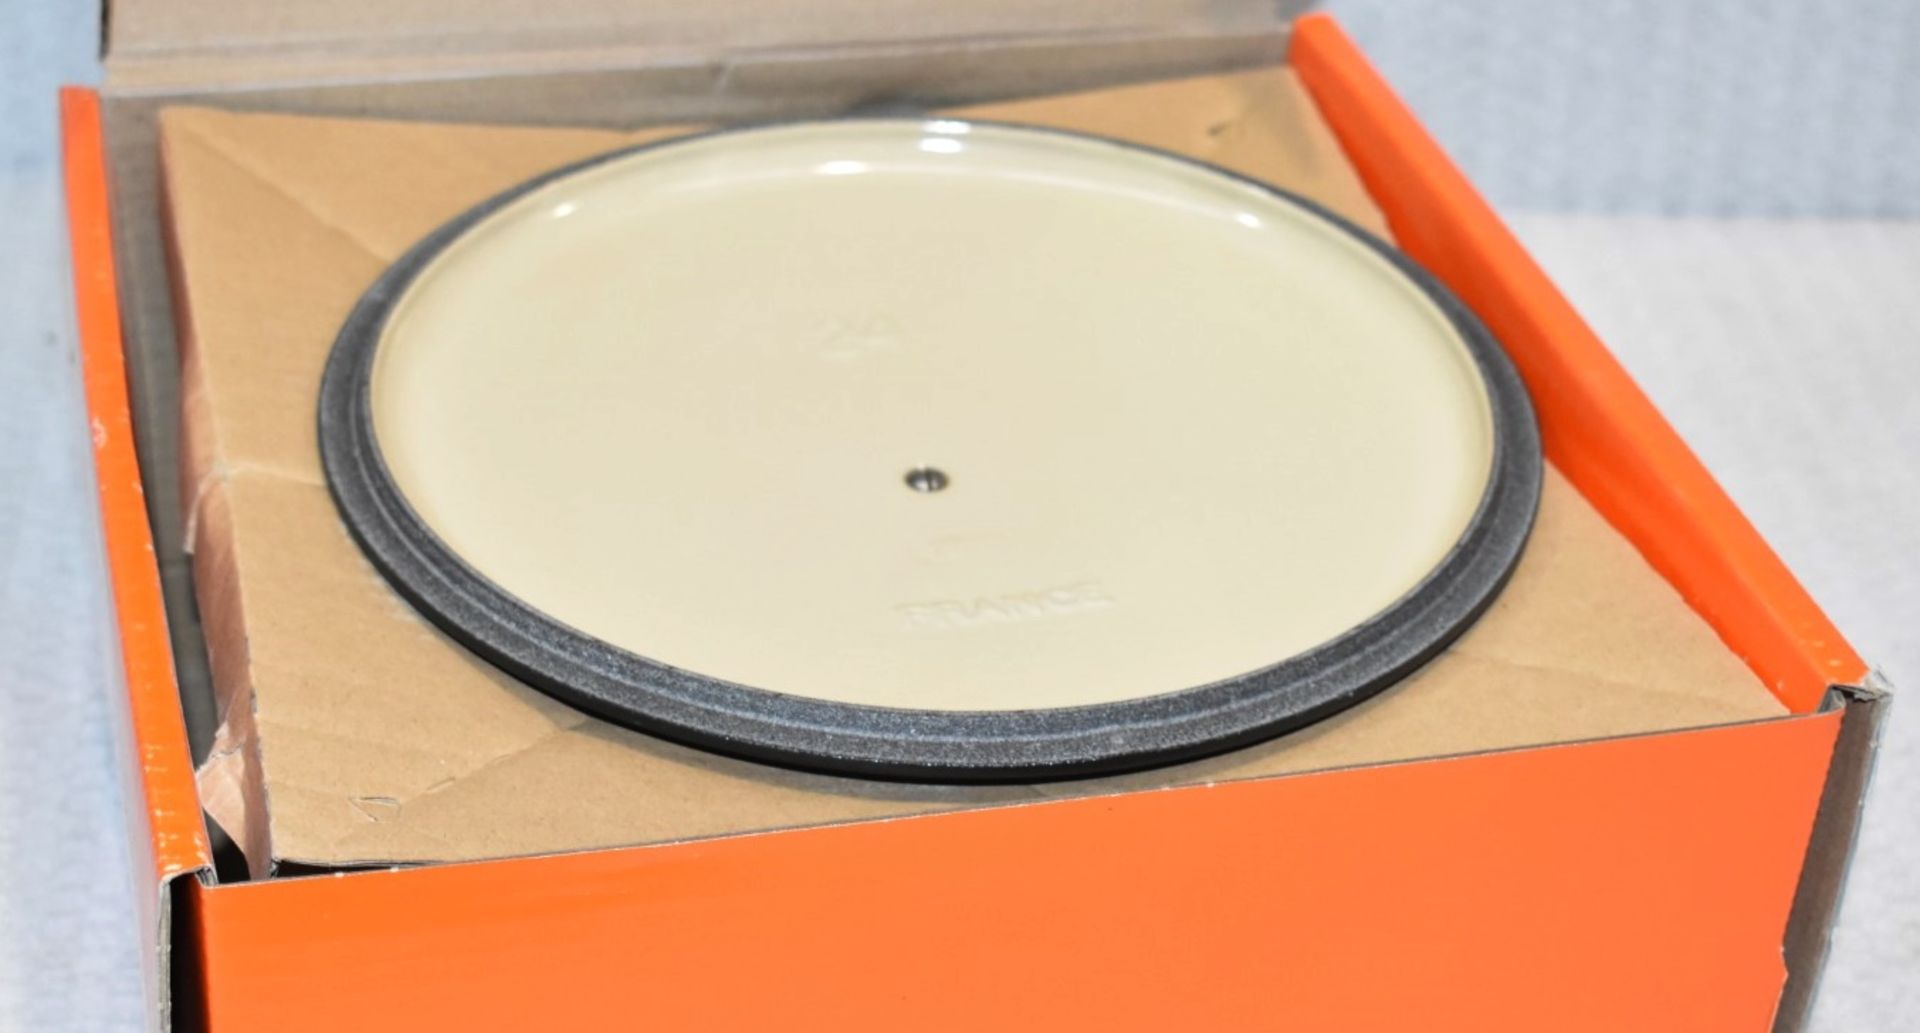 1 x LE CREUSET Round enamelled Cast Iron 24cm Casserole Dish, in Matt Black - Original RRP £190.00 - Image 7 of 12